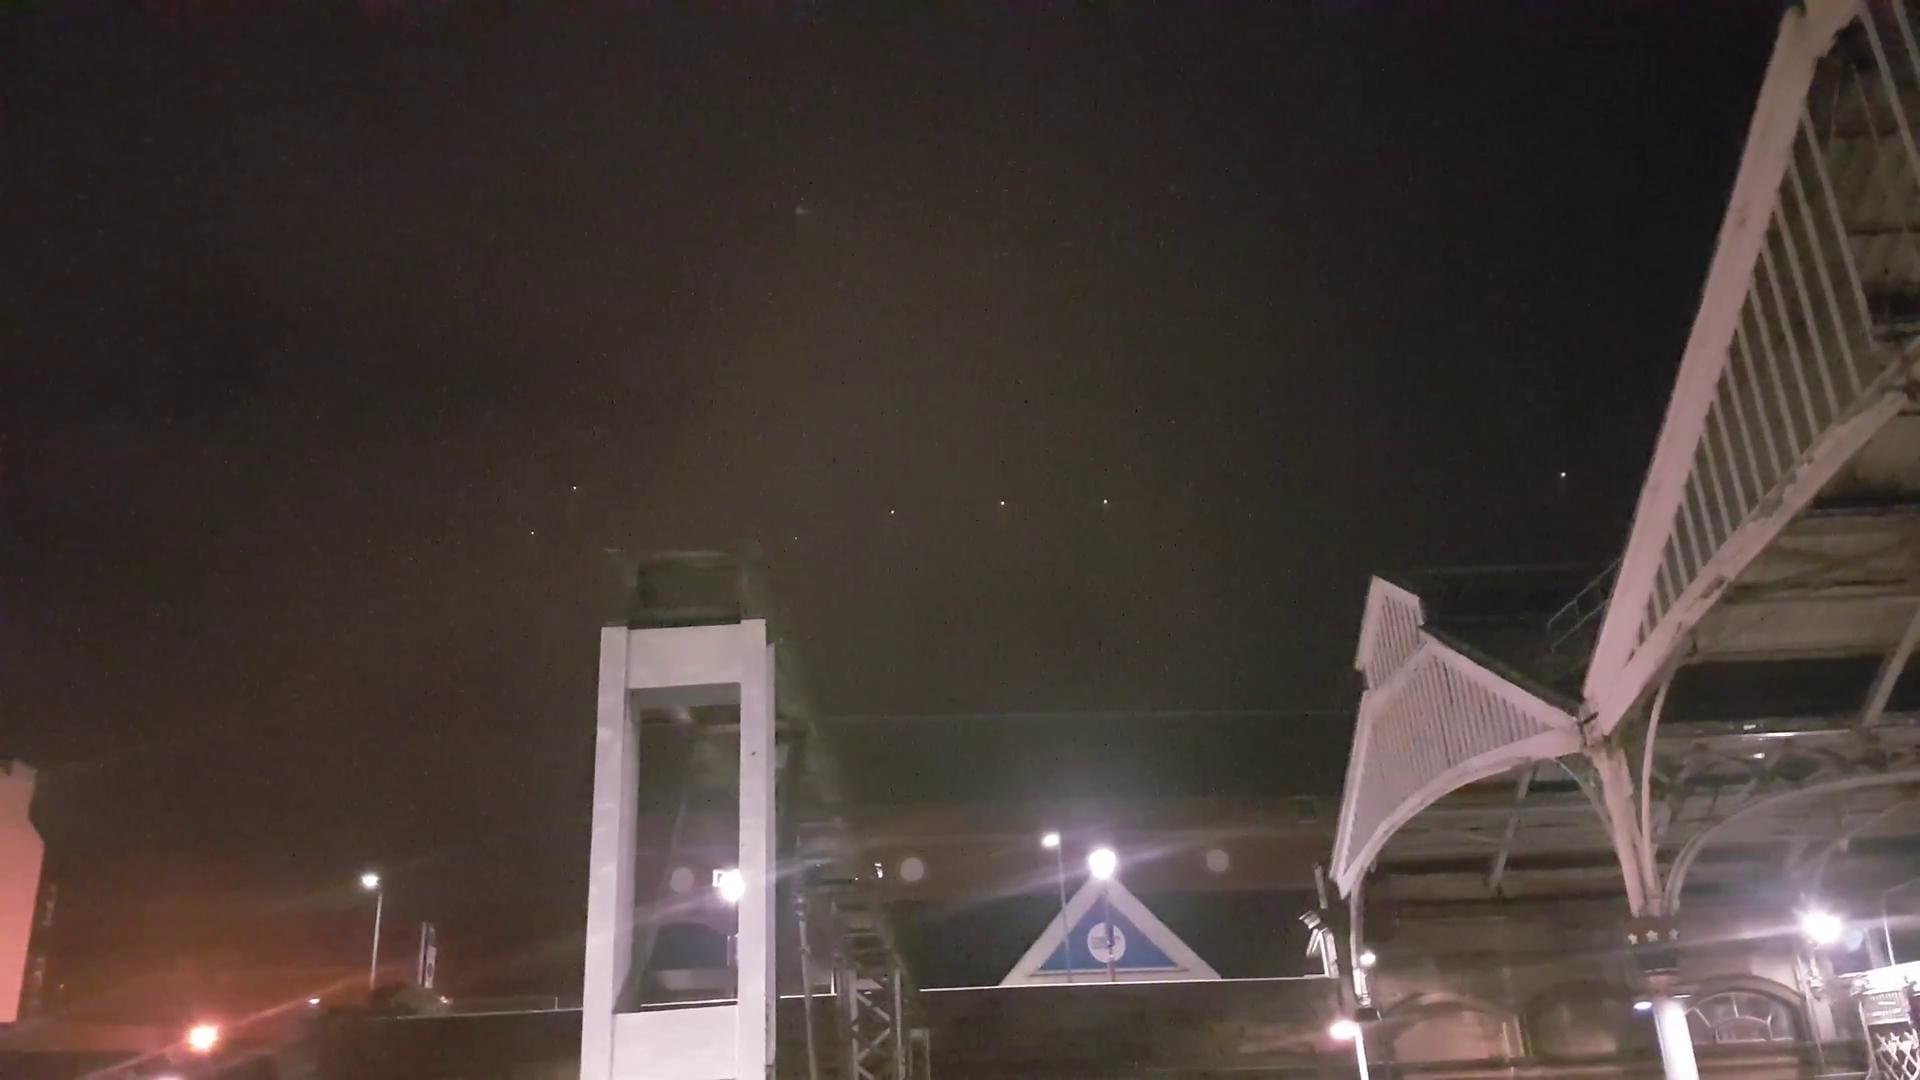 Ufo's Strange lights flying over Preston, Lancashire